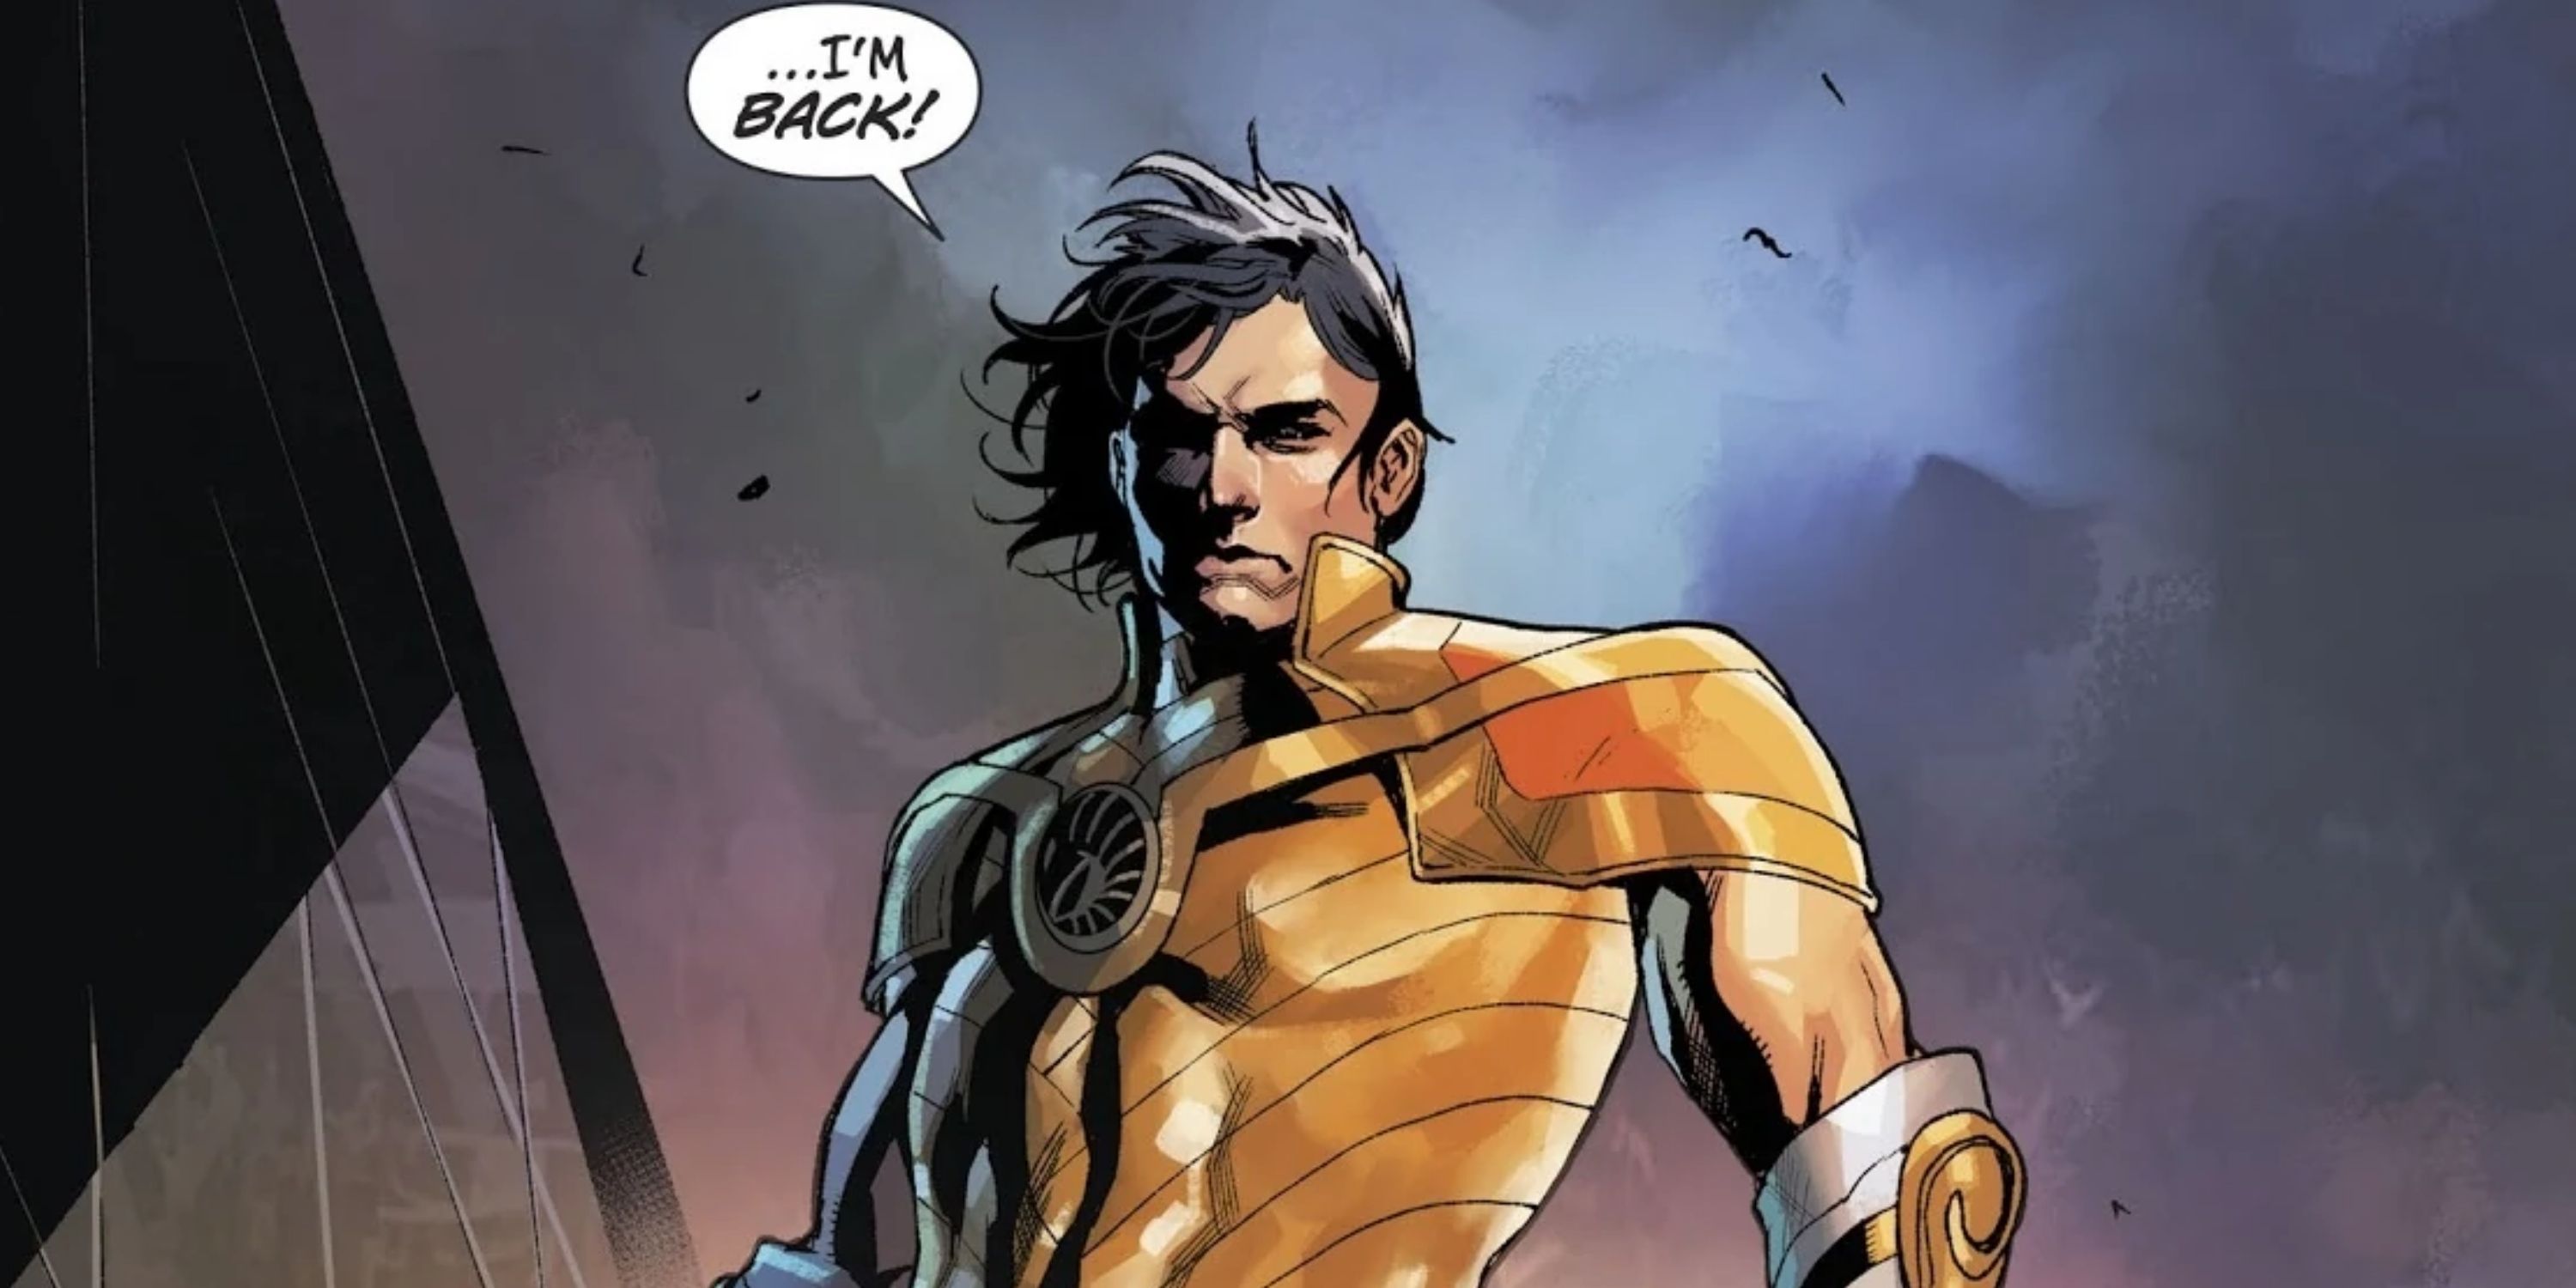 Jason, Wonder Woman's twin brother in DC comics